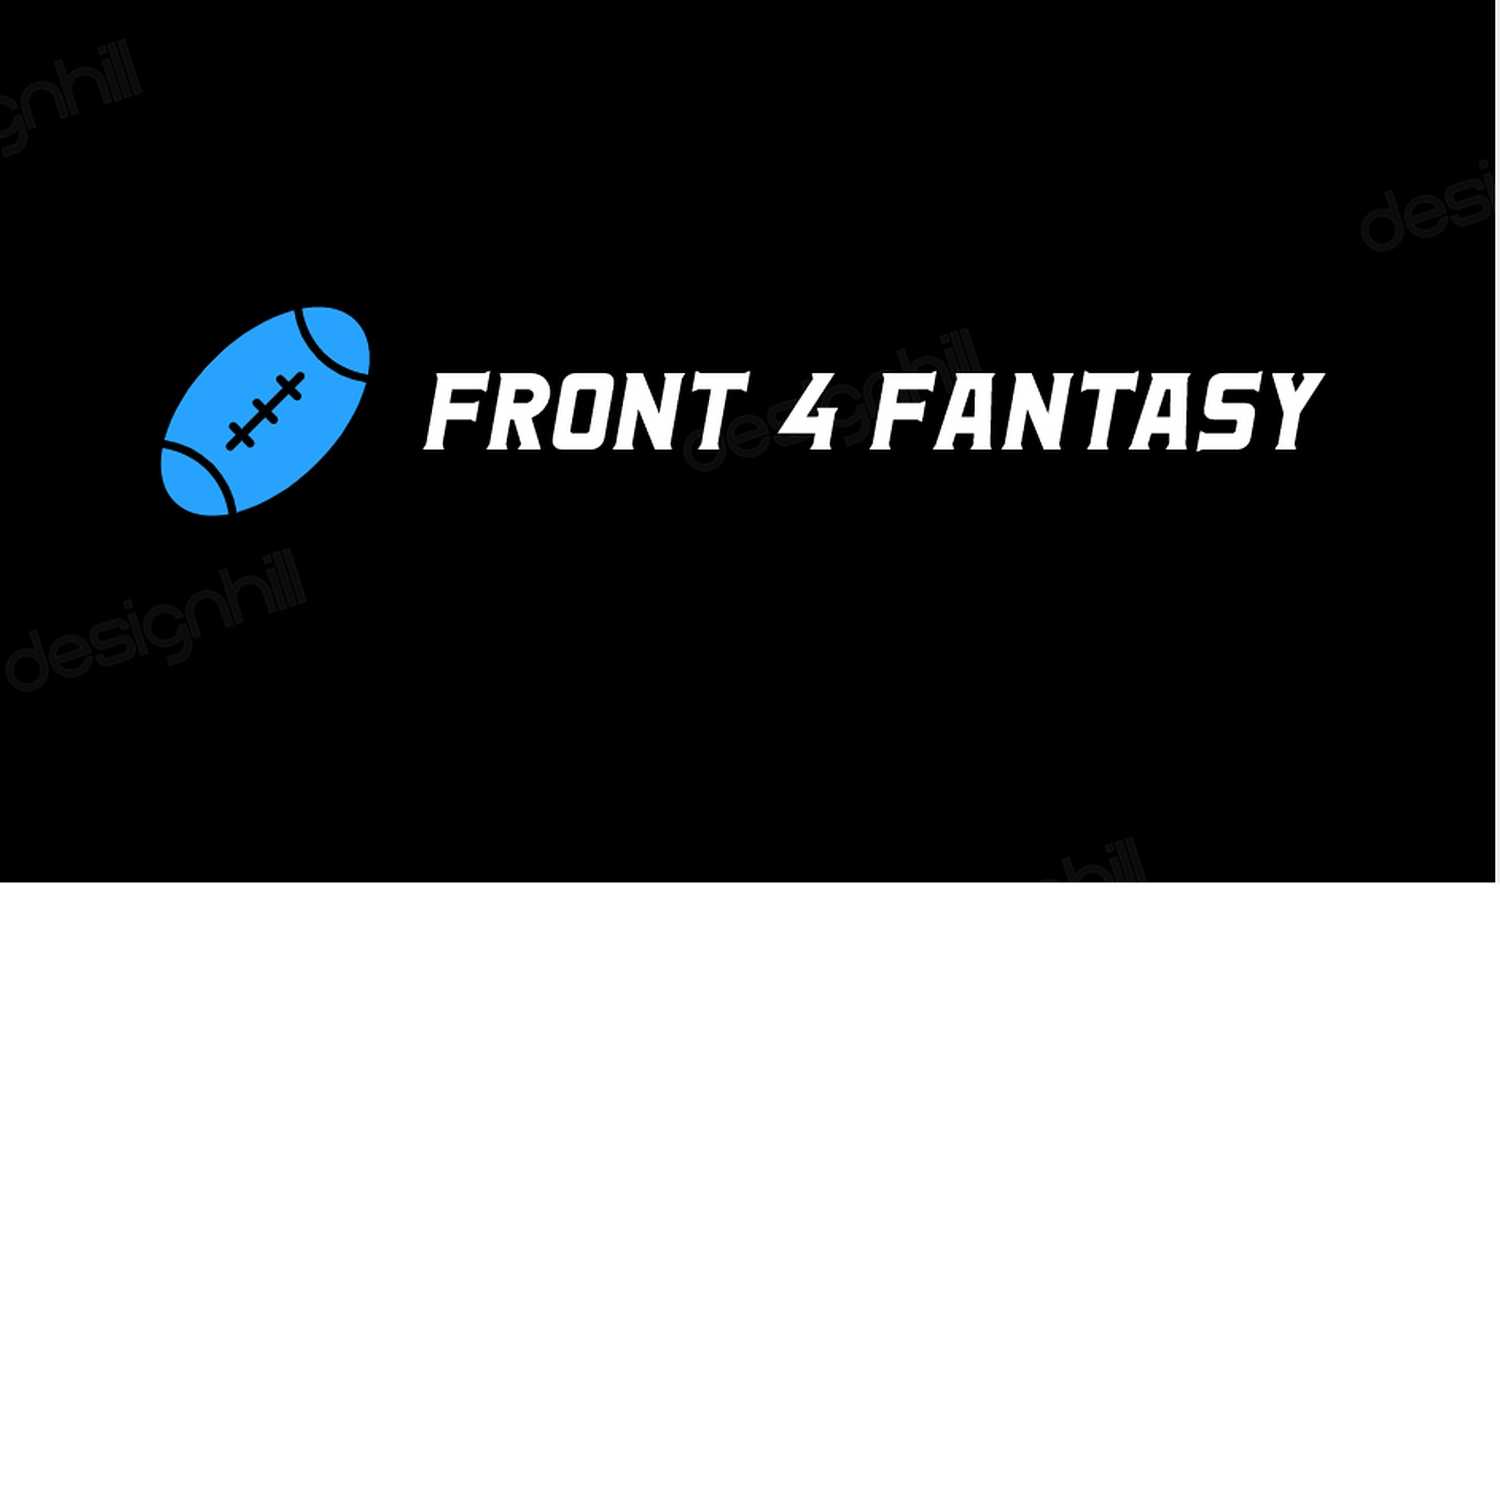 Front 4 Fantasy